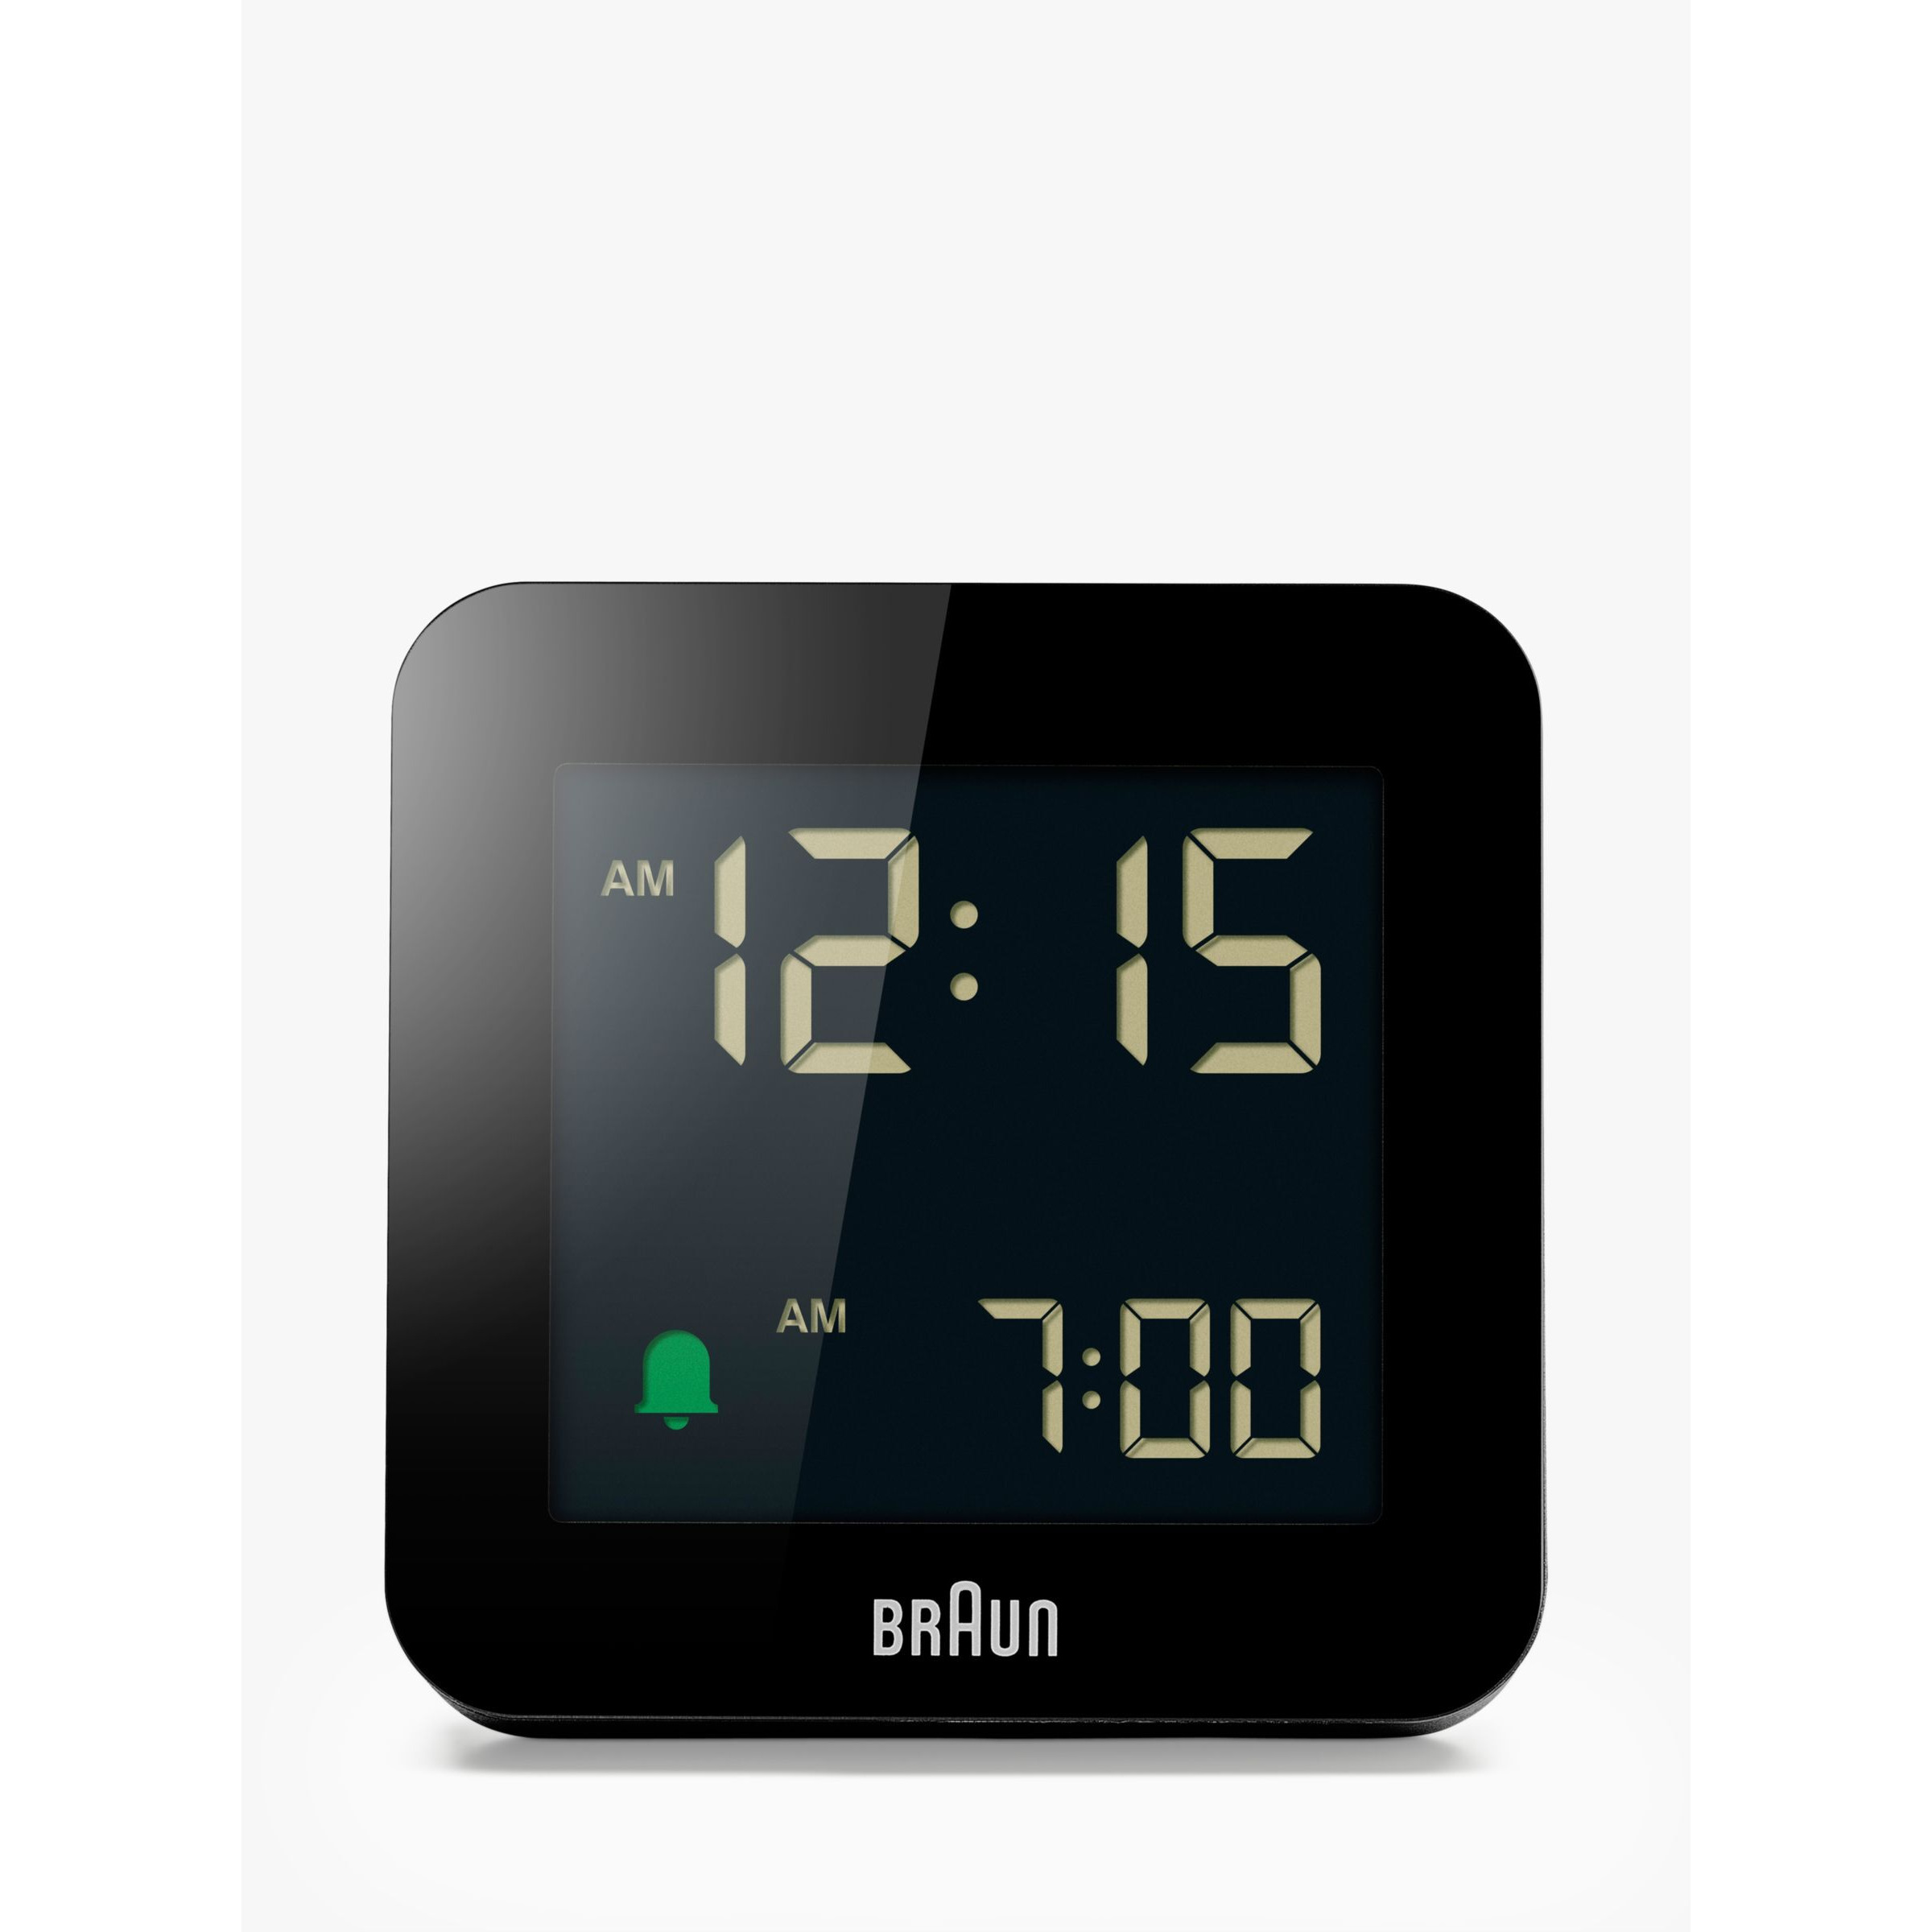 Braun Large Digital Alarm Clock - image 1